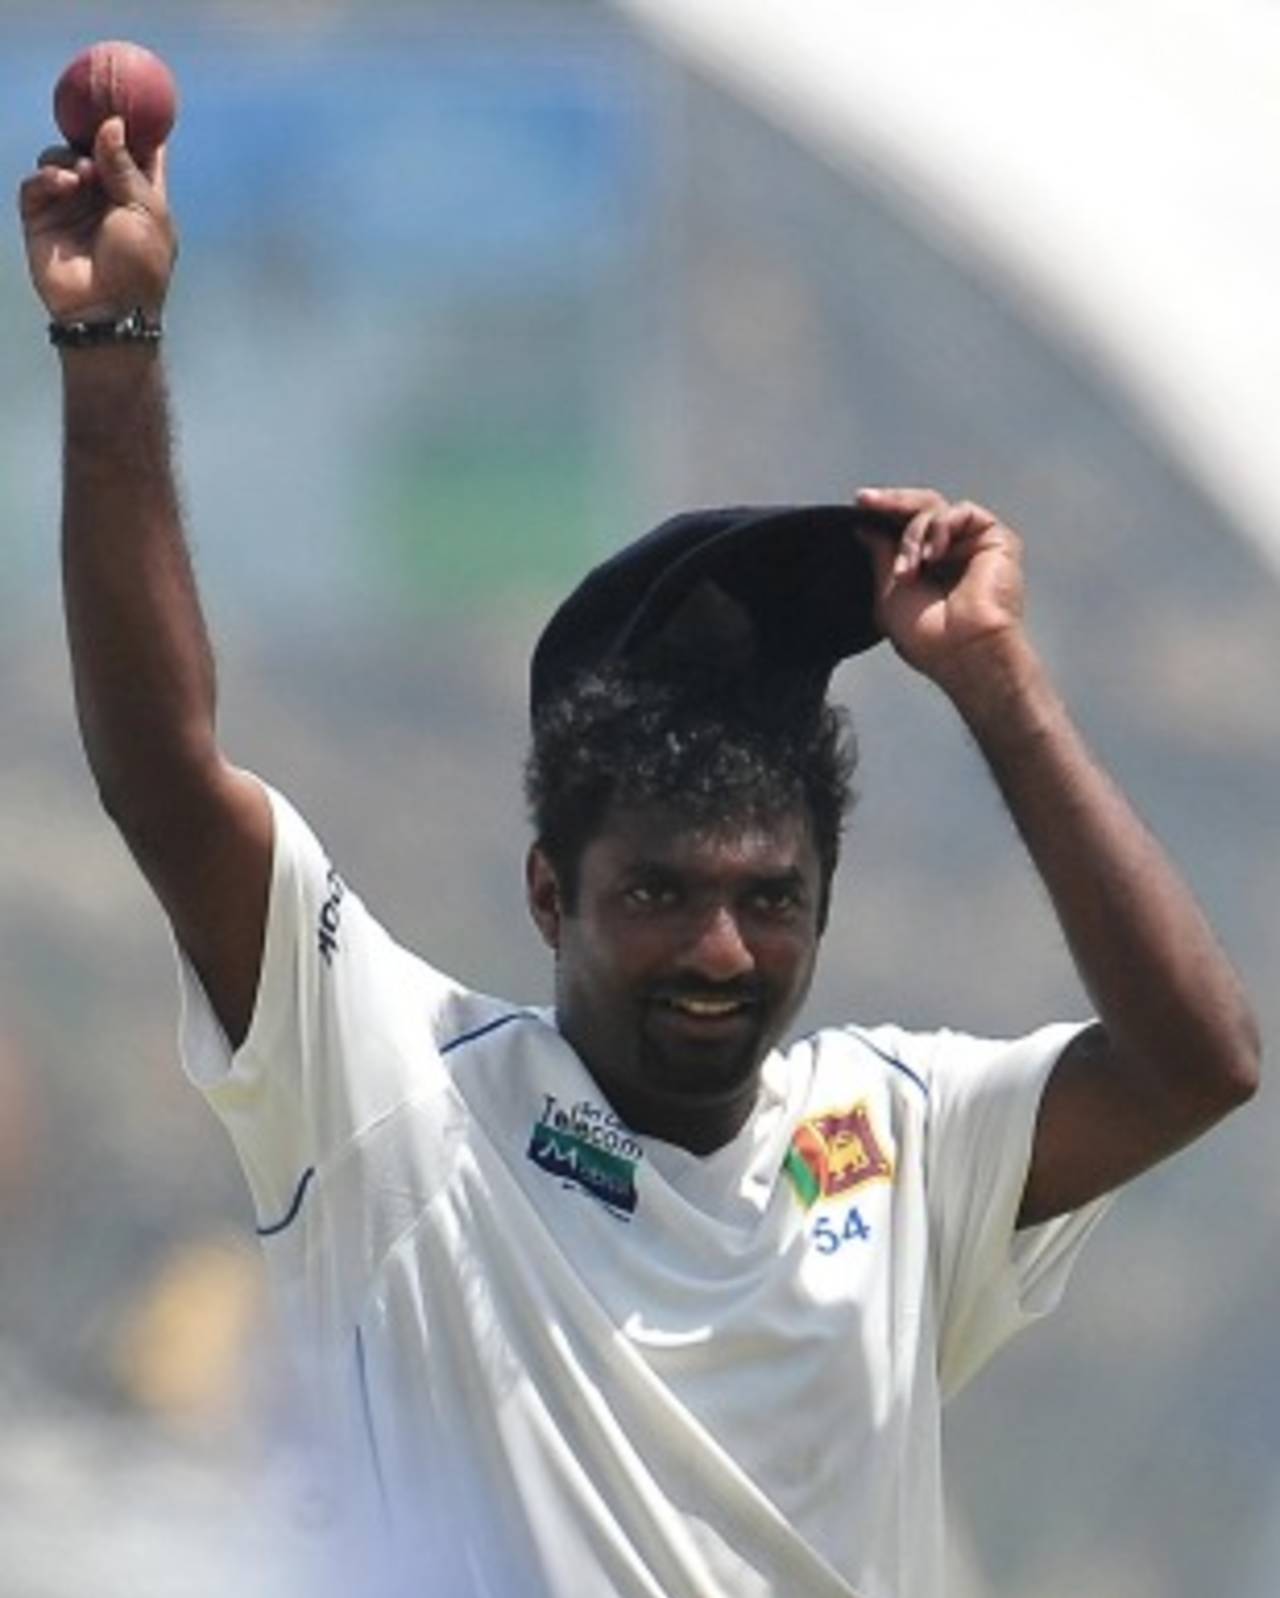 Muttiah Muralitharan celebrates his five-for, Sri Lanka v India, 1st Test, Galle, 4th day, July 21, 2010